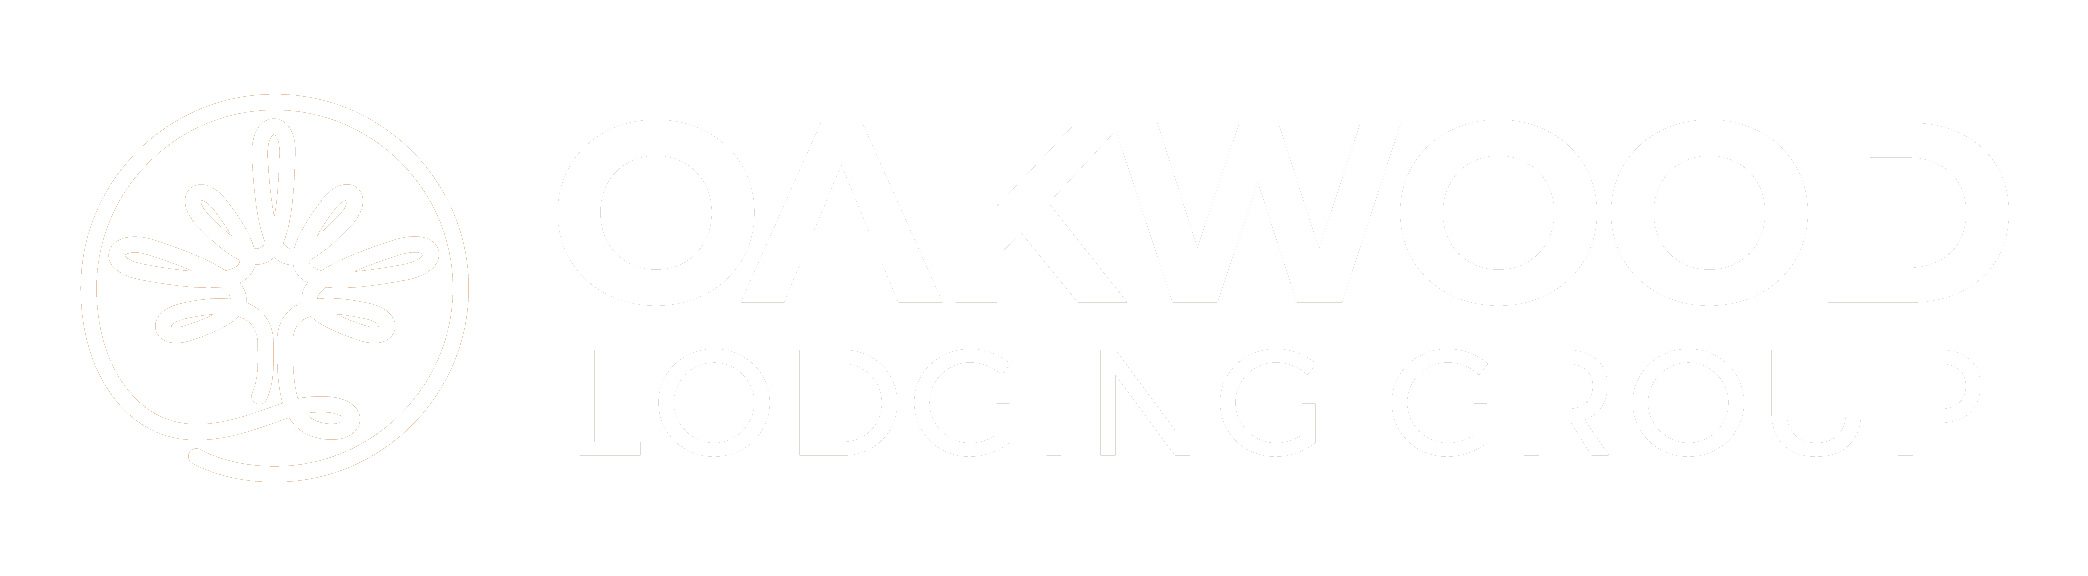 oakwood-logo-white